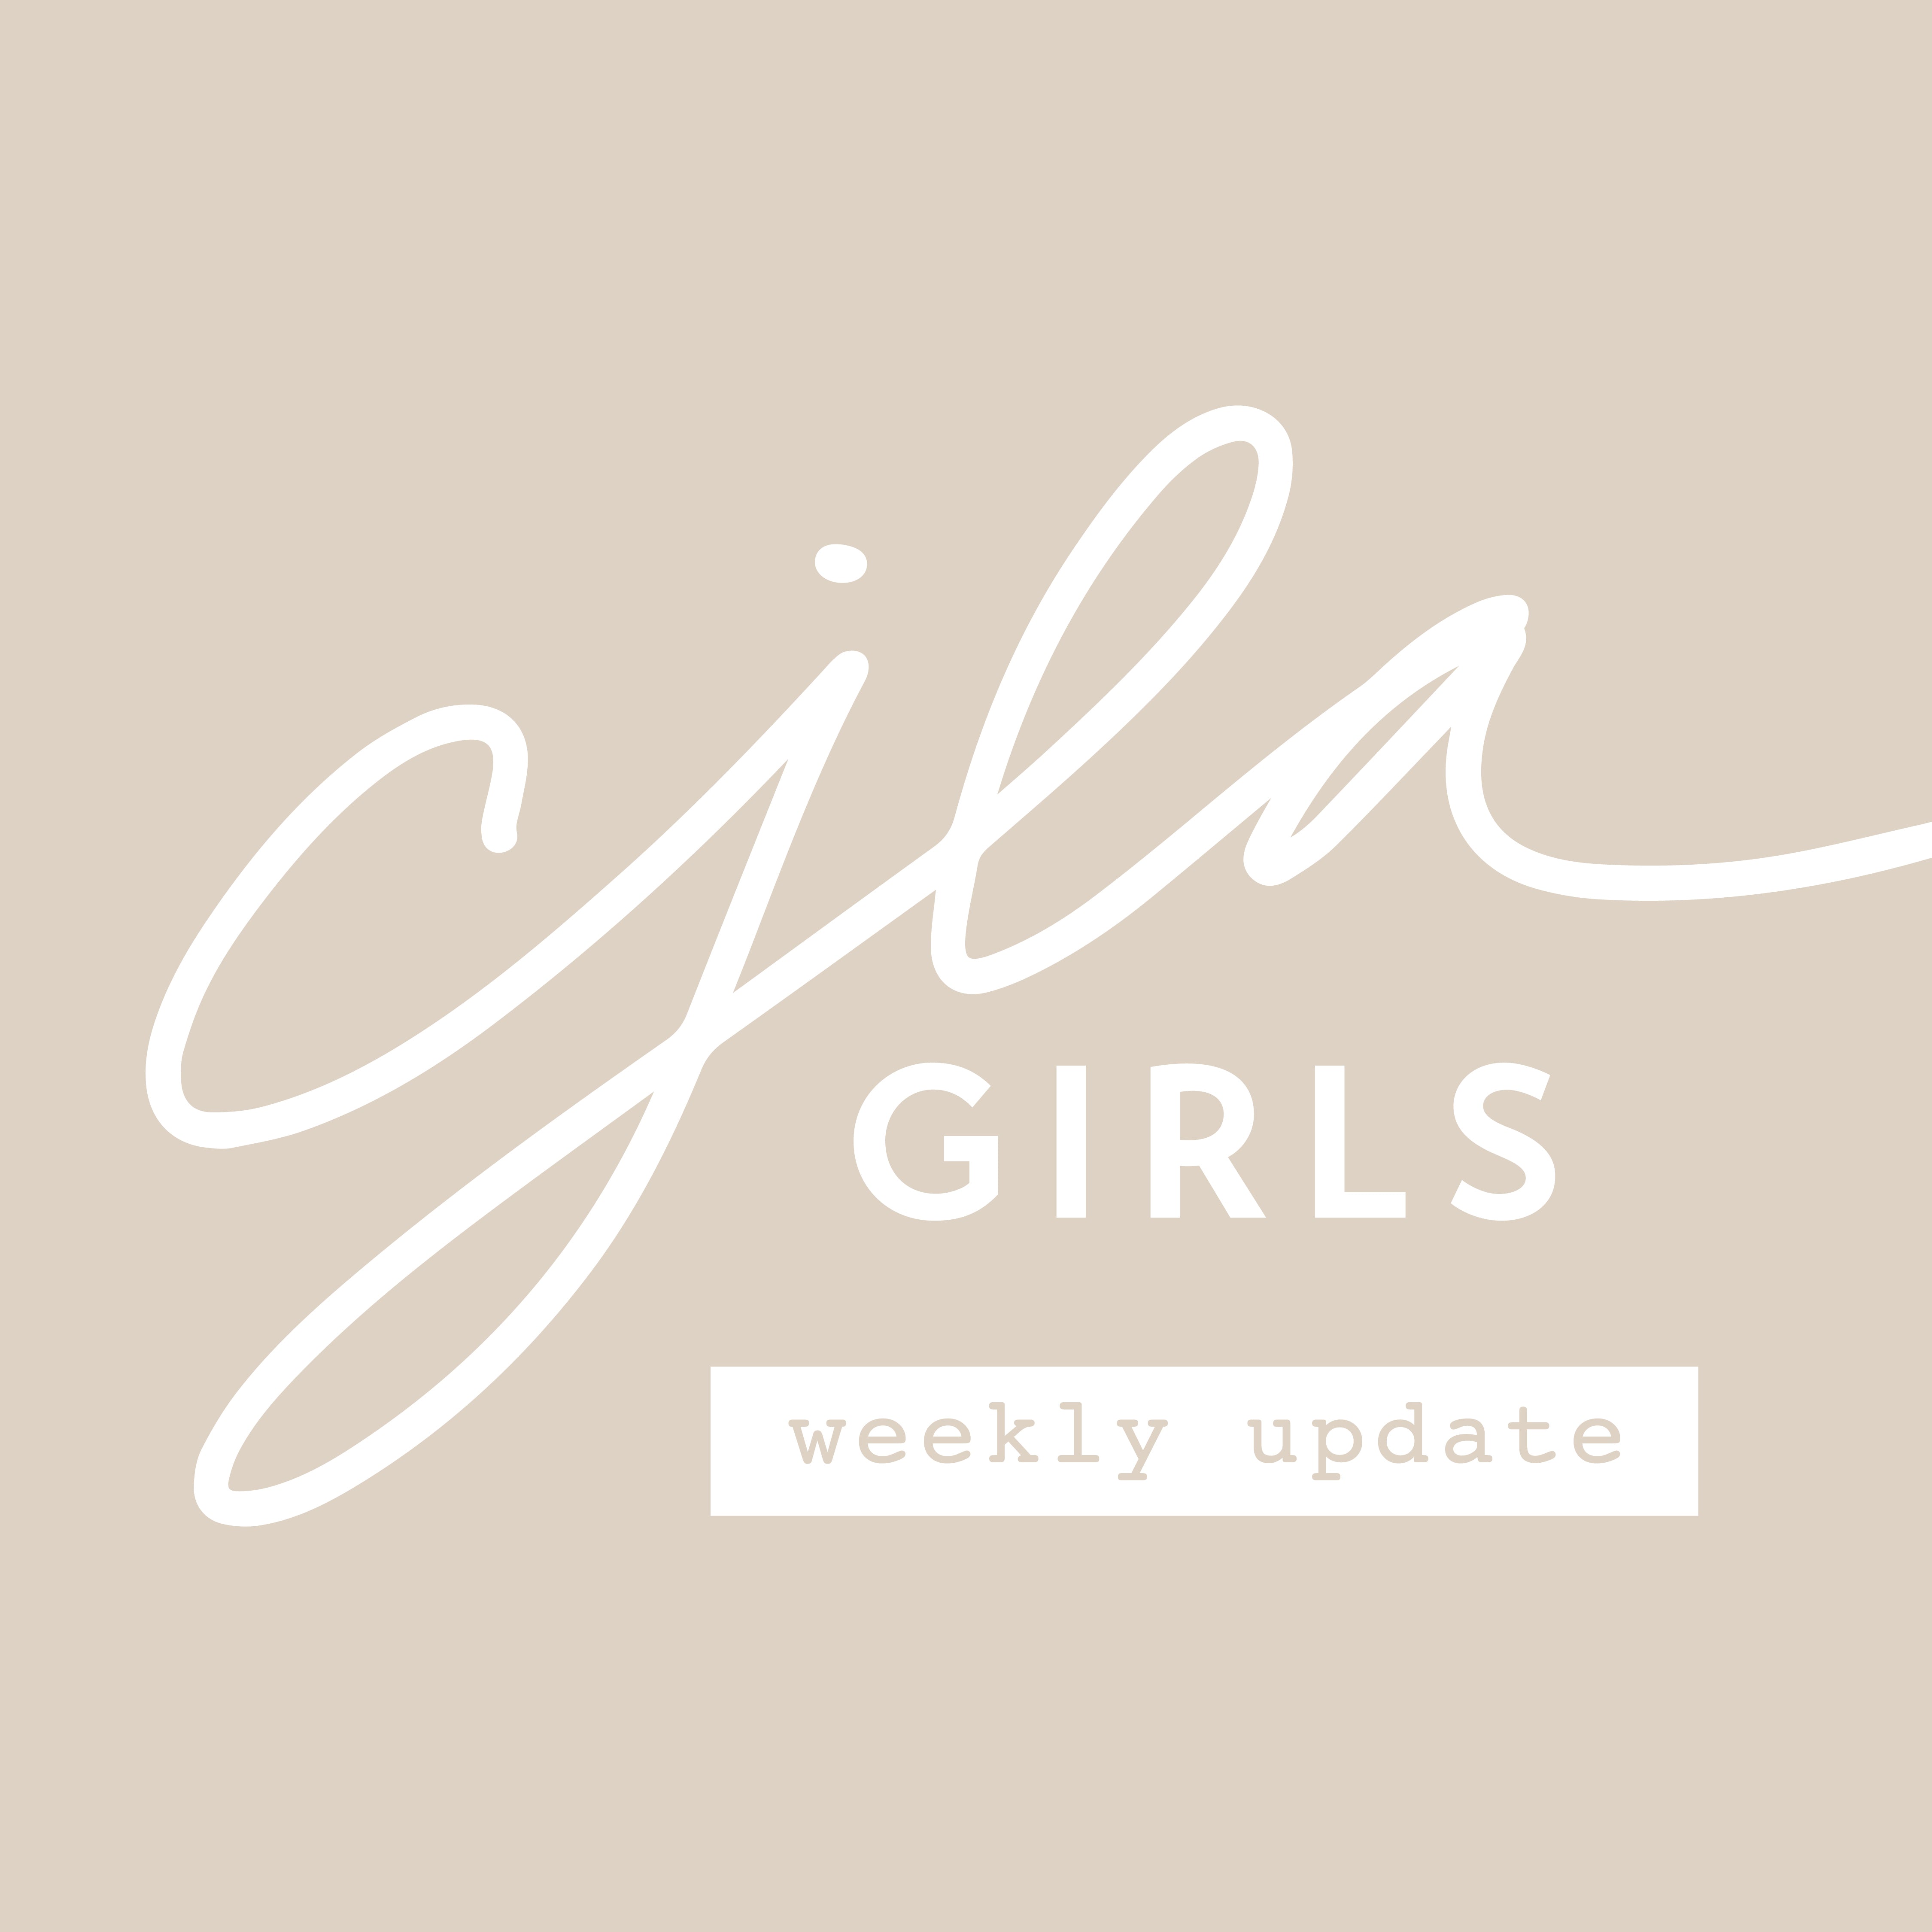 CJLA Girls Weekly Update: March 22-28